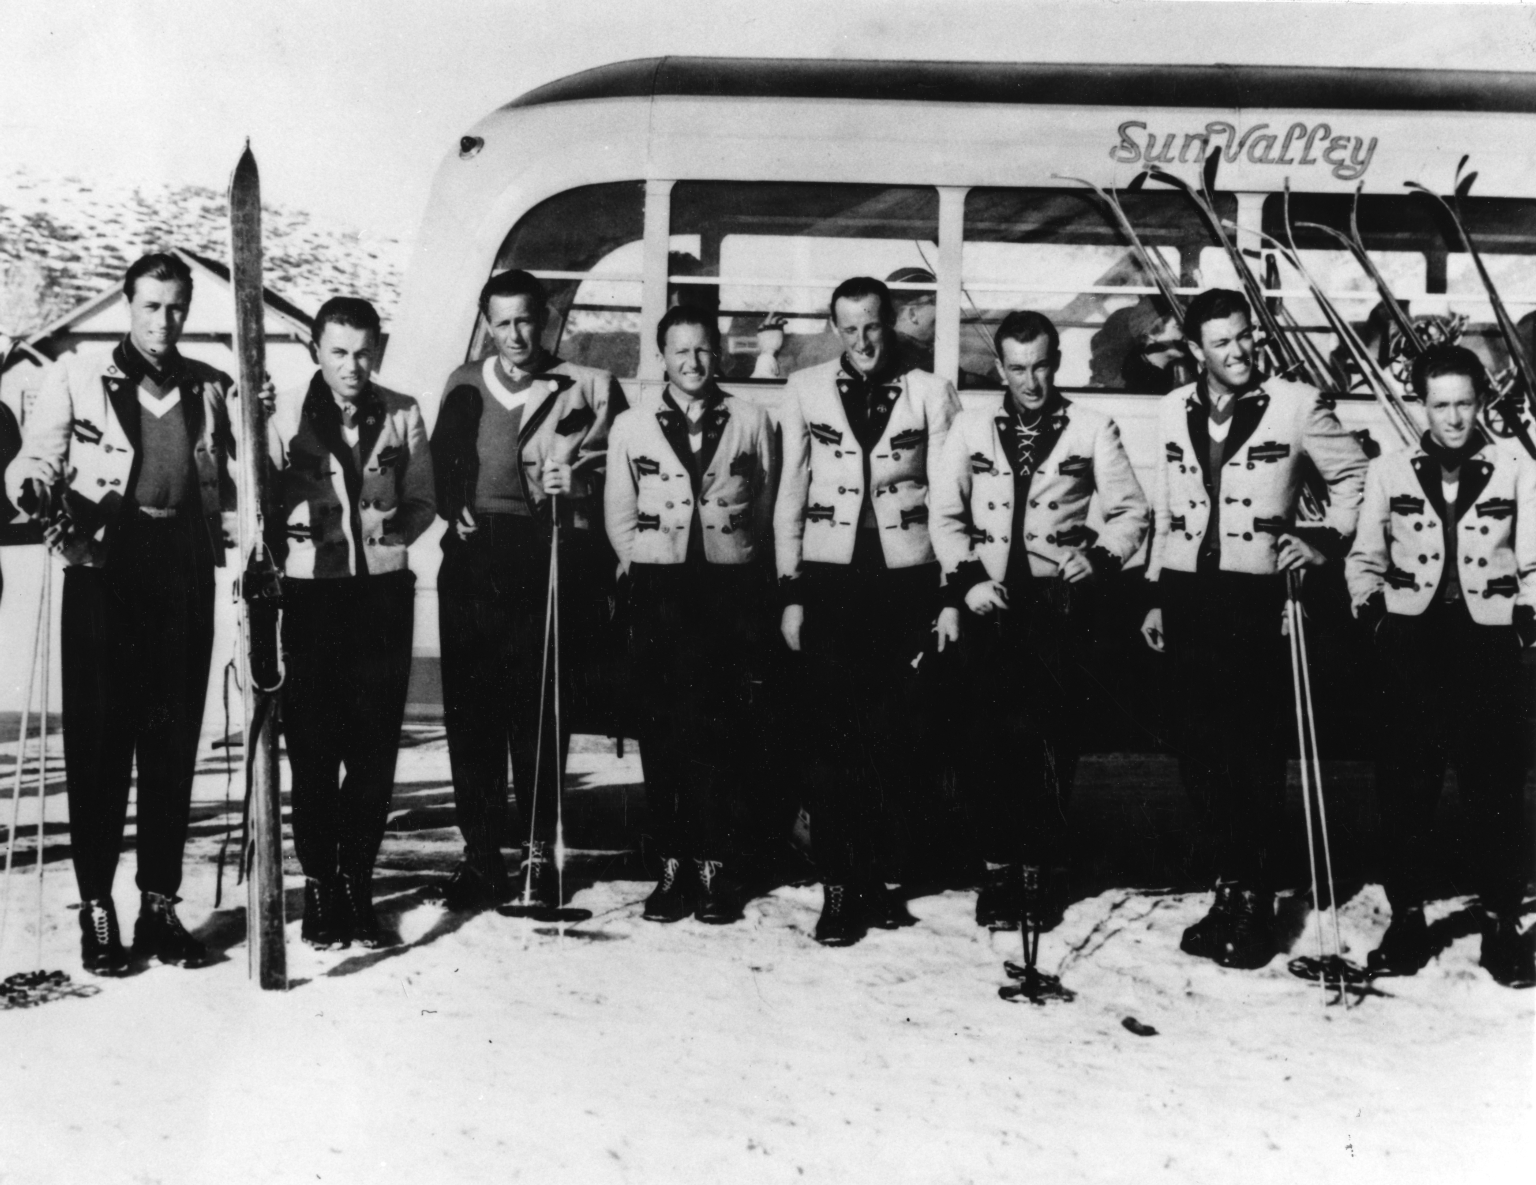 Sun Valley Ski School instructors, 1936-1937